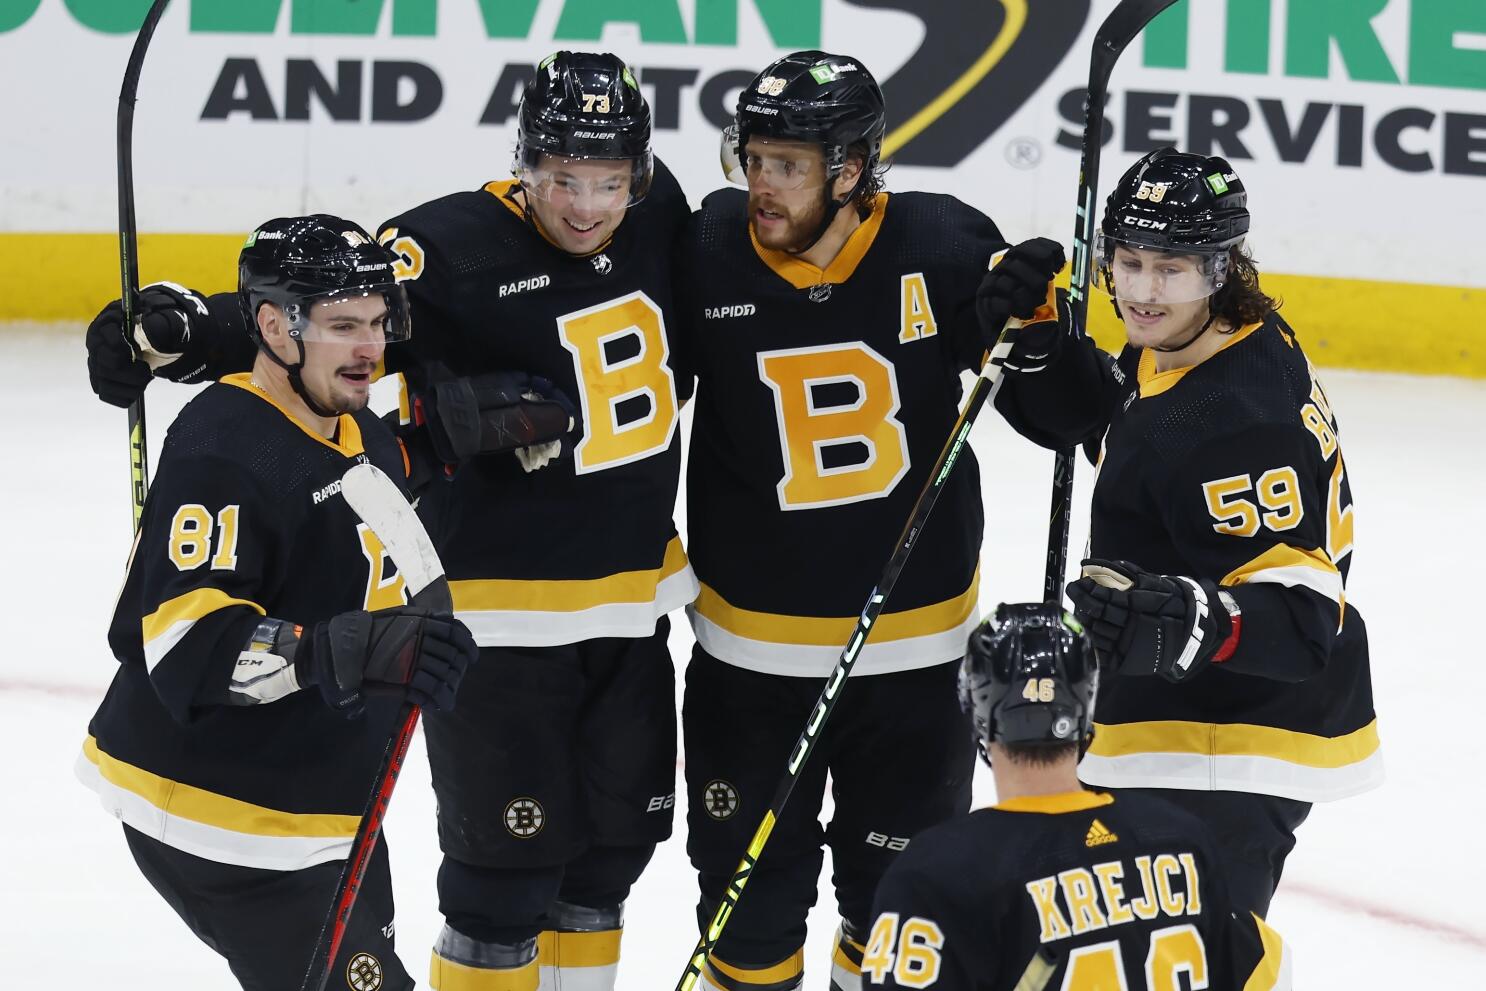 BC hockey hit big on scoring combination - The Boston Globe